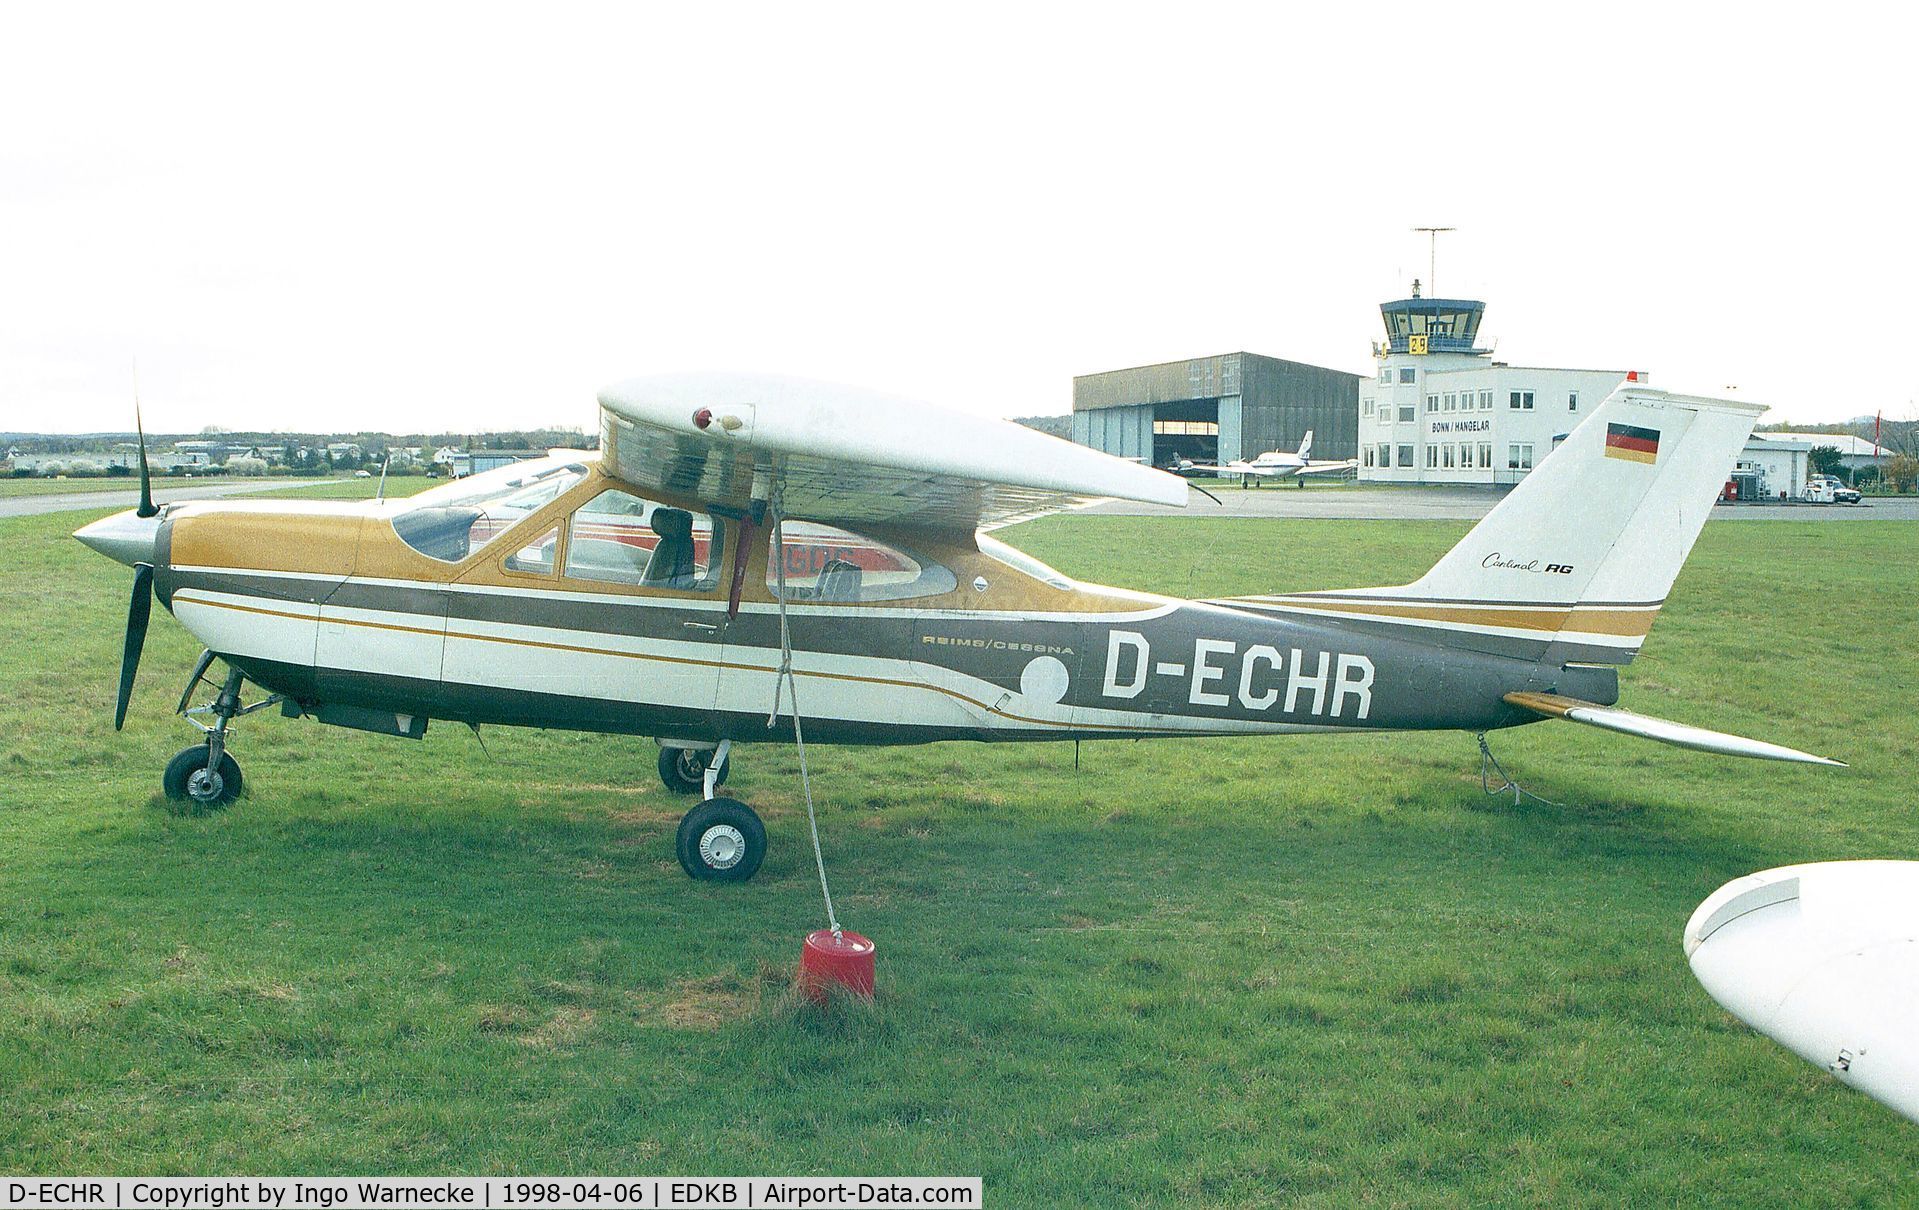 D-ECHR, Reims FR177RG Cardinal RG C/N F17700008/00106, Cessna (Reims) FR177RG Cardinal RG at Bonn-Hangelar airfield